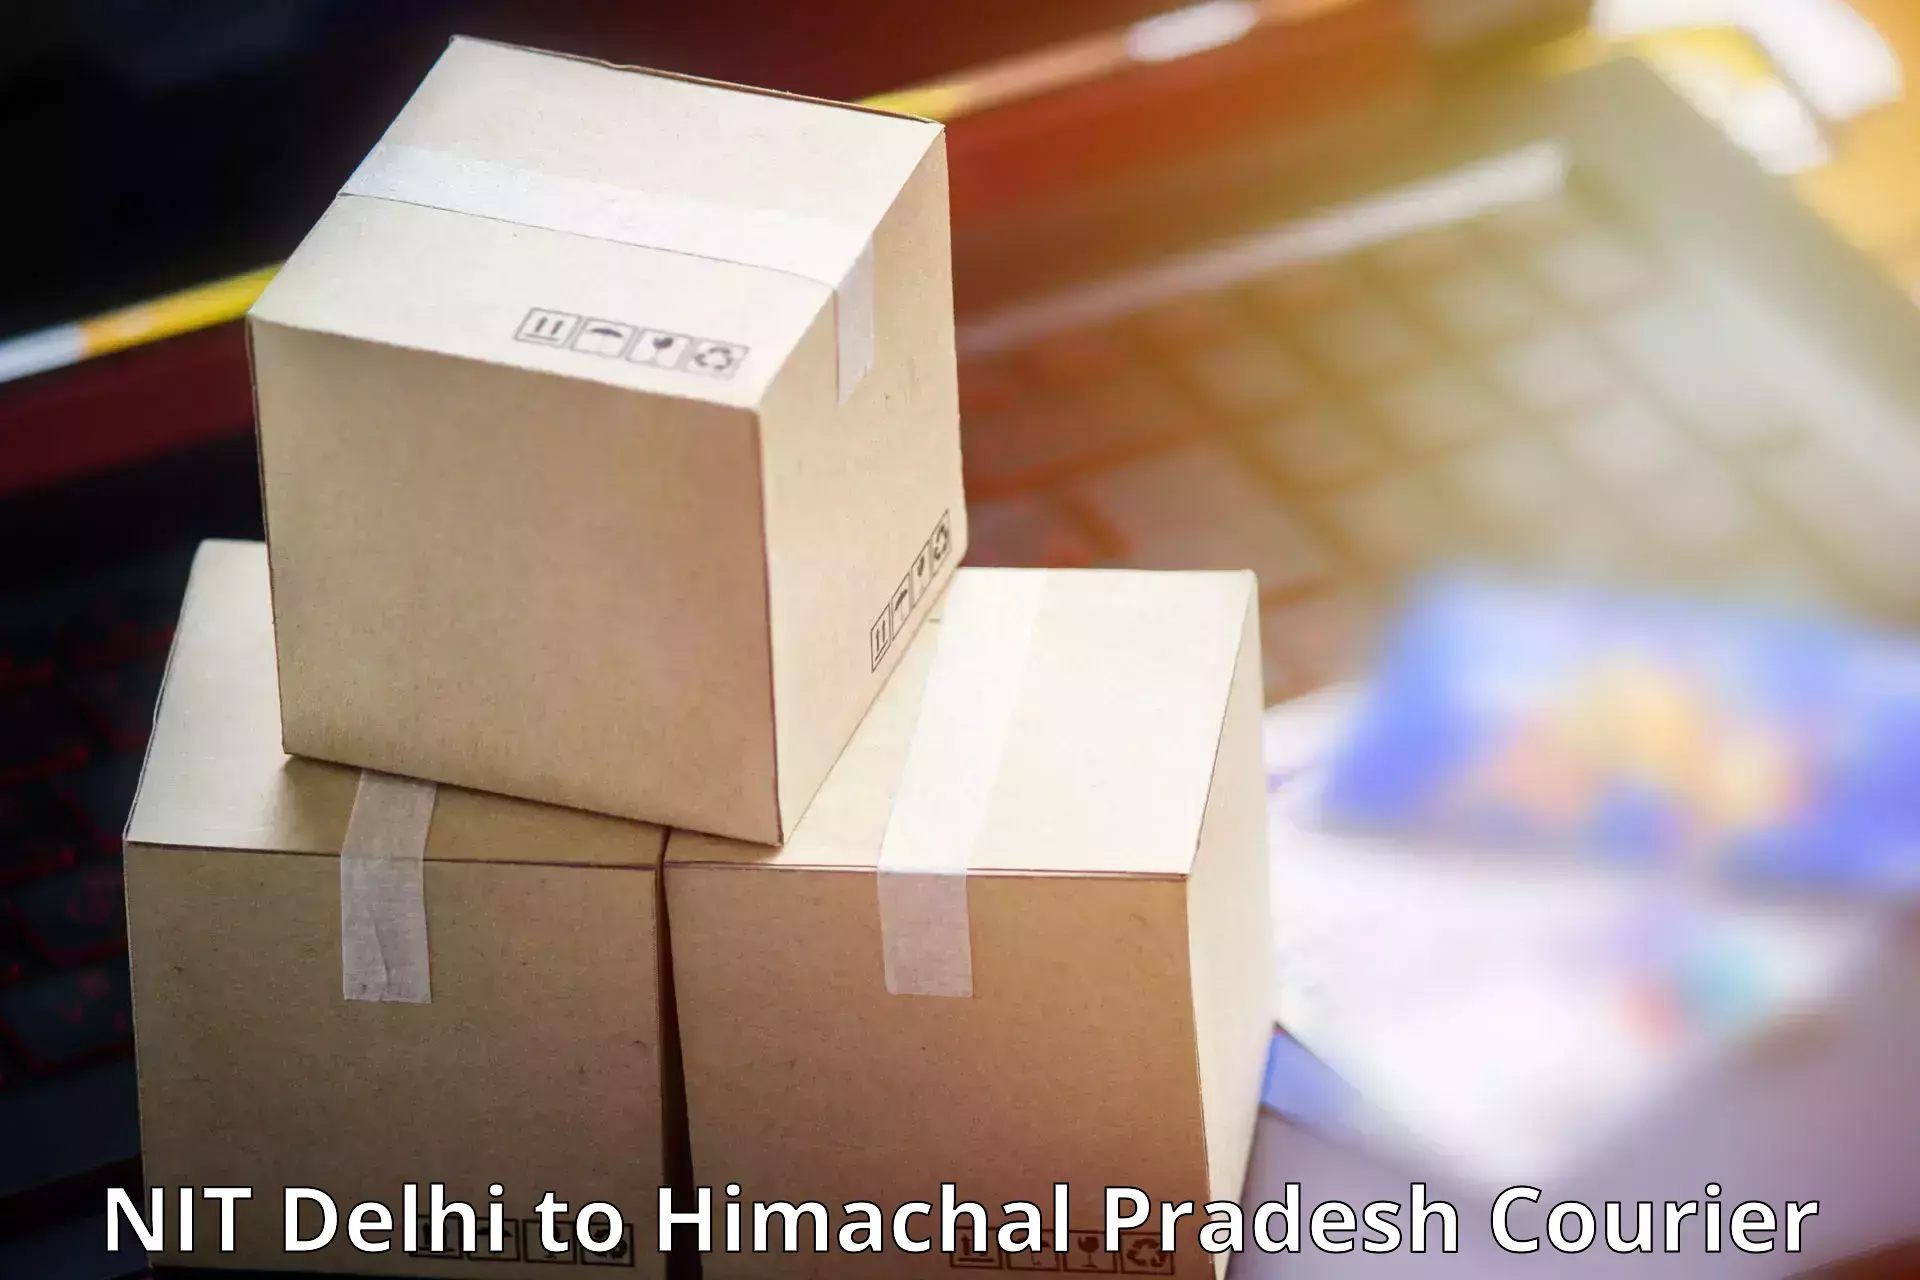 Urban courier service NIT Delhi to Himachal Pradesh